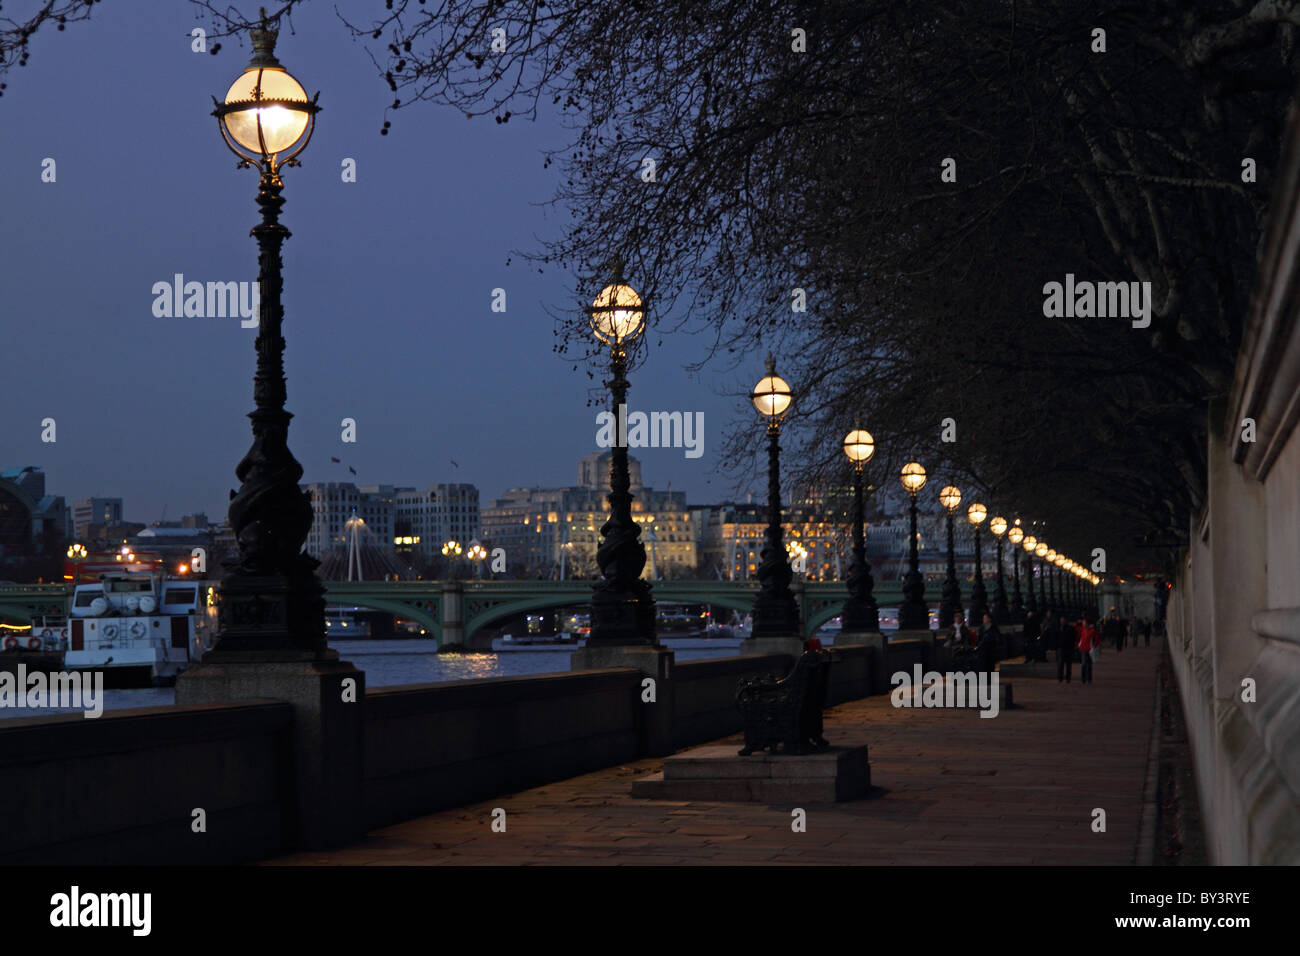 South Bank von Lampe Licht Thames Embankment London Weg Abendspaziergang Stockfoto